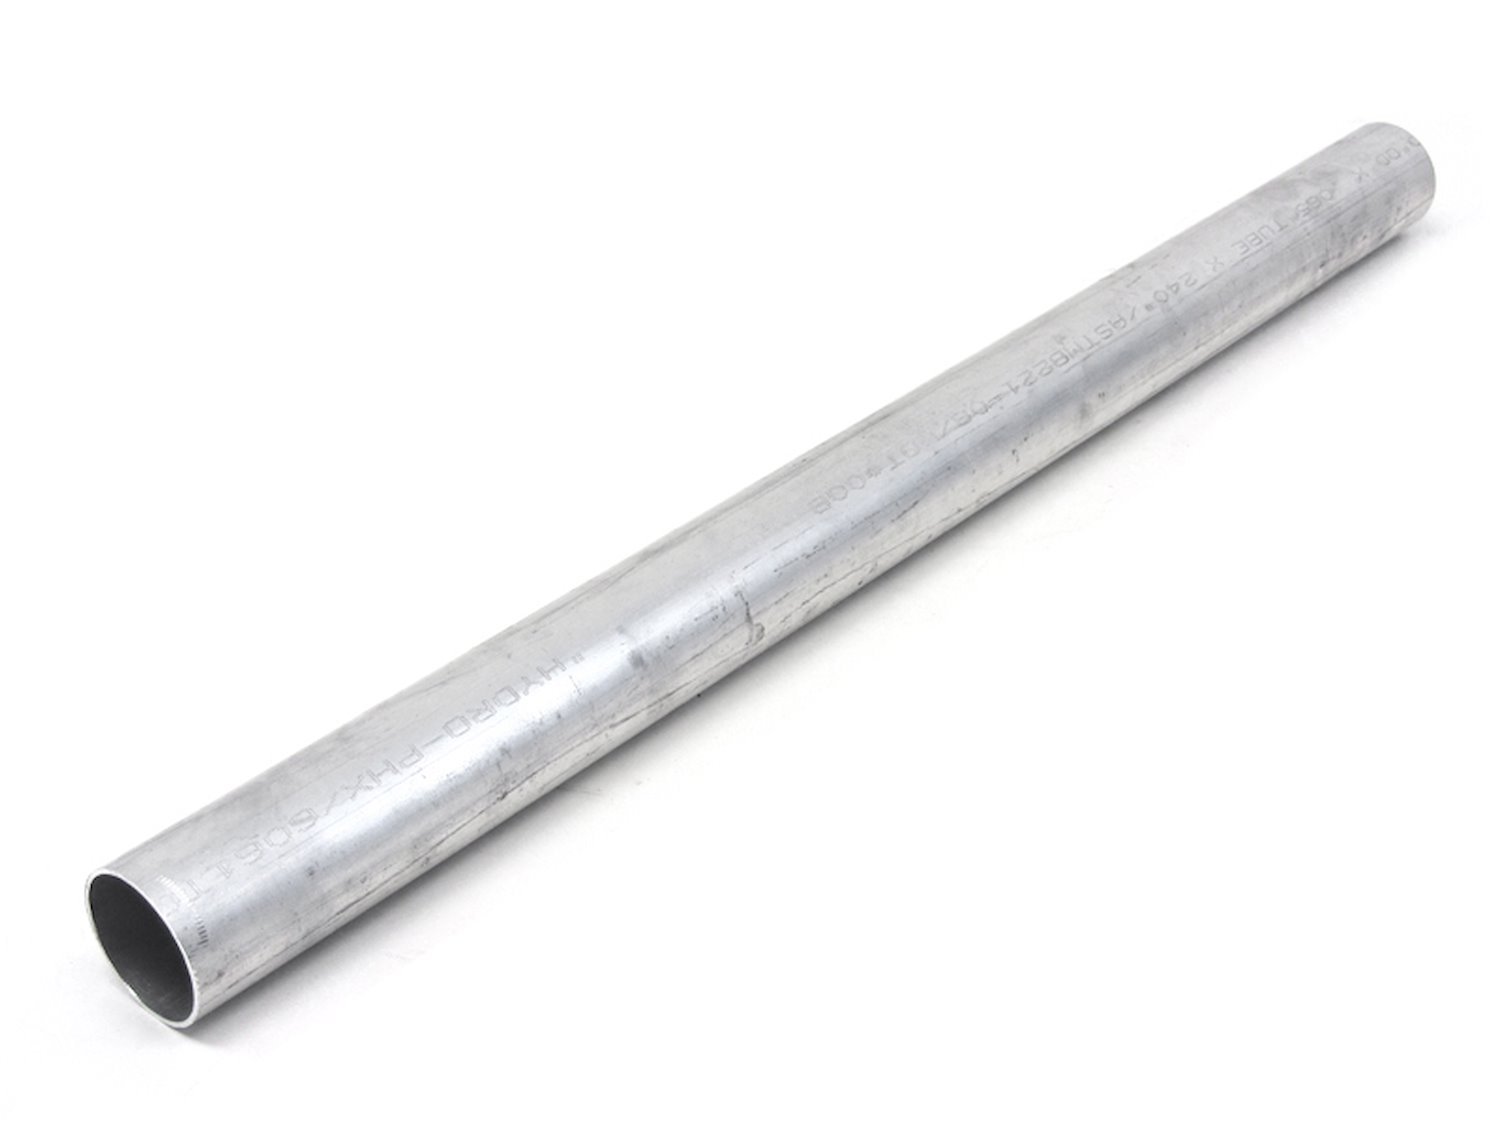 AST-2F-225 Aluminum Tubing, 6061 Aluminum, Straight Tubing, 2-1/4 in. OD, Seamless, Raw Finish, 2 ft. Long